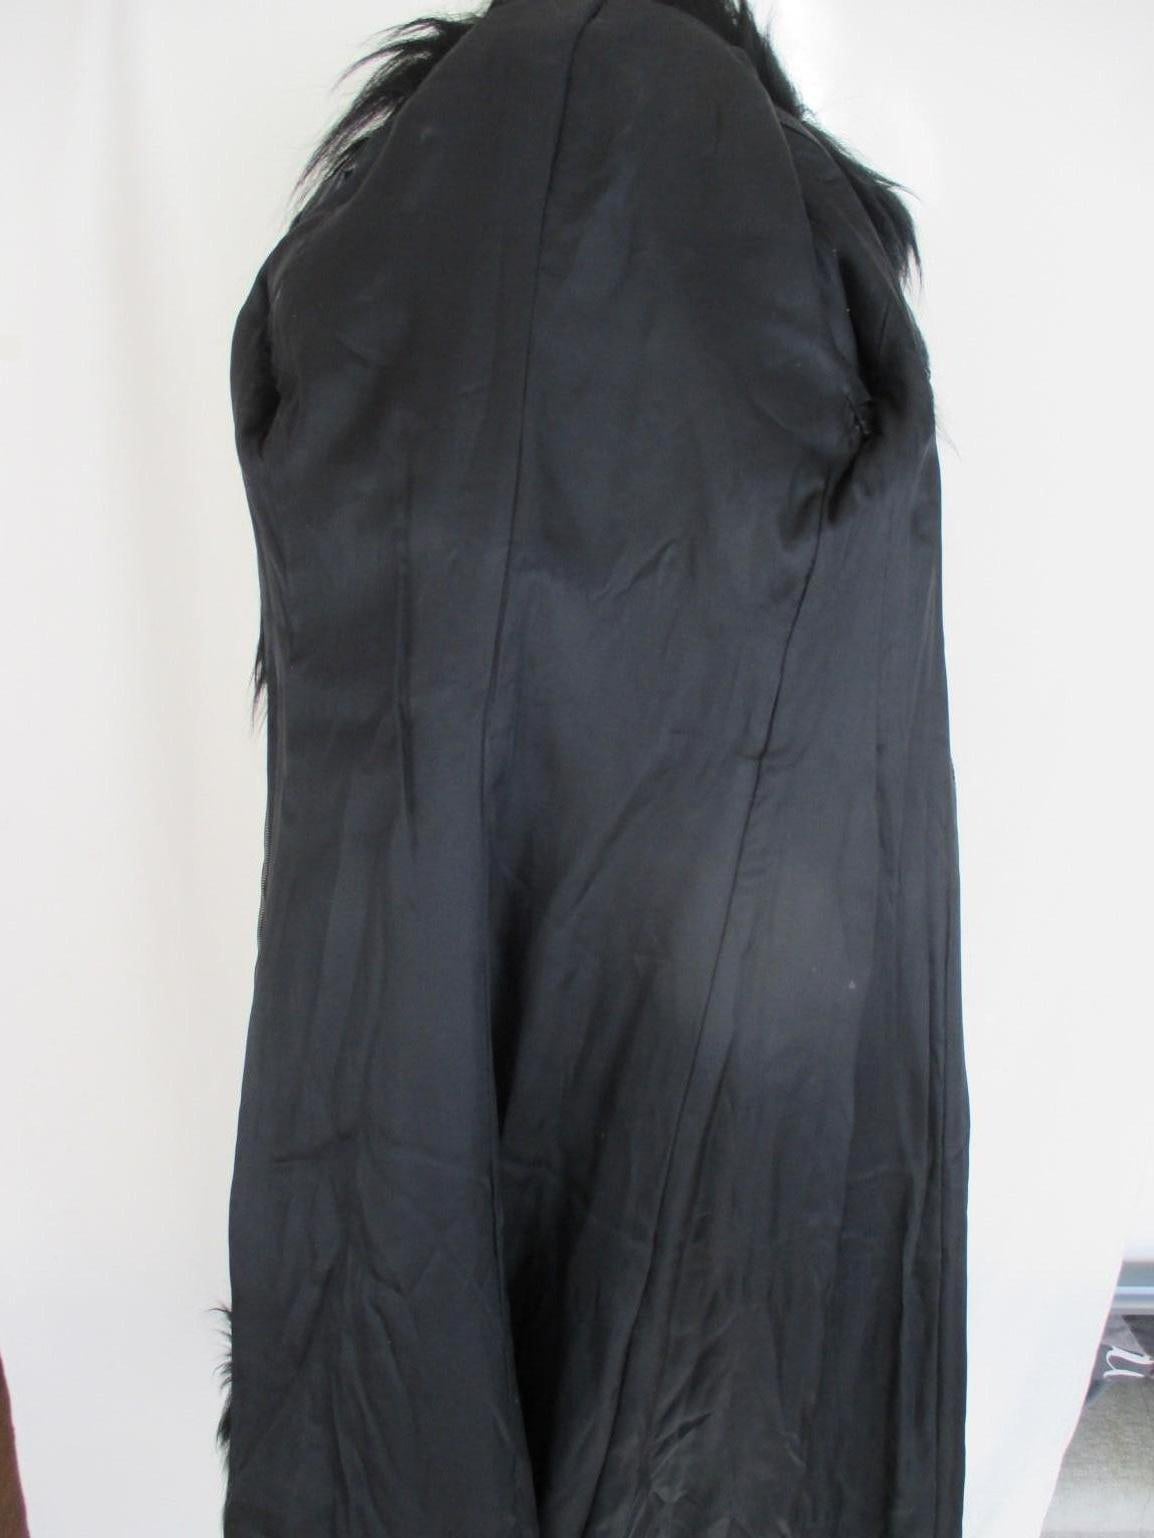 Vintage Black Leather coat with Fur For Sale 4